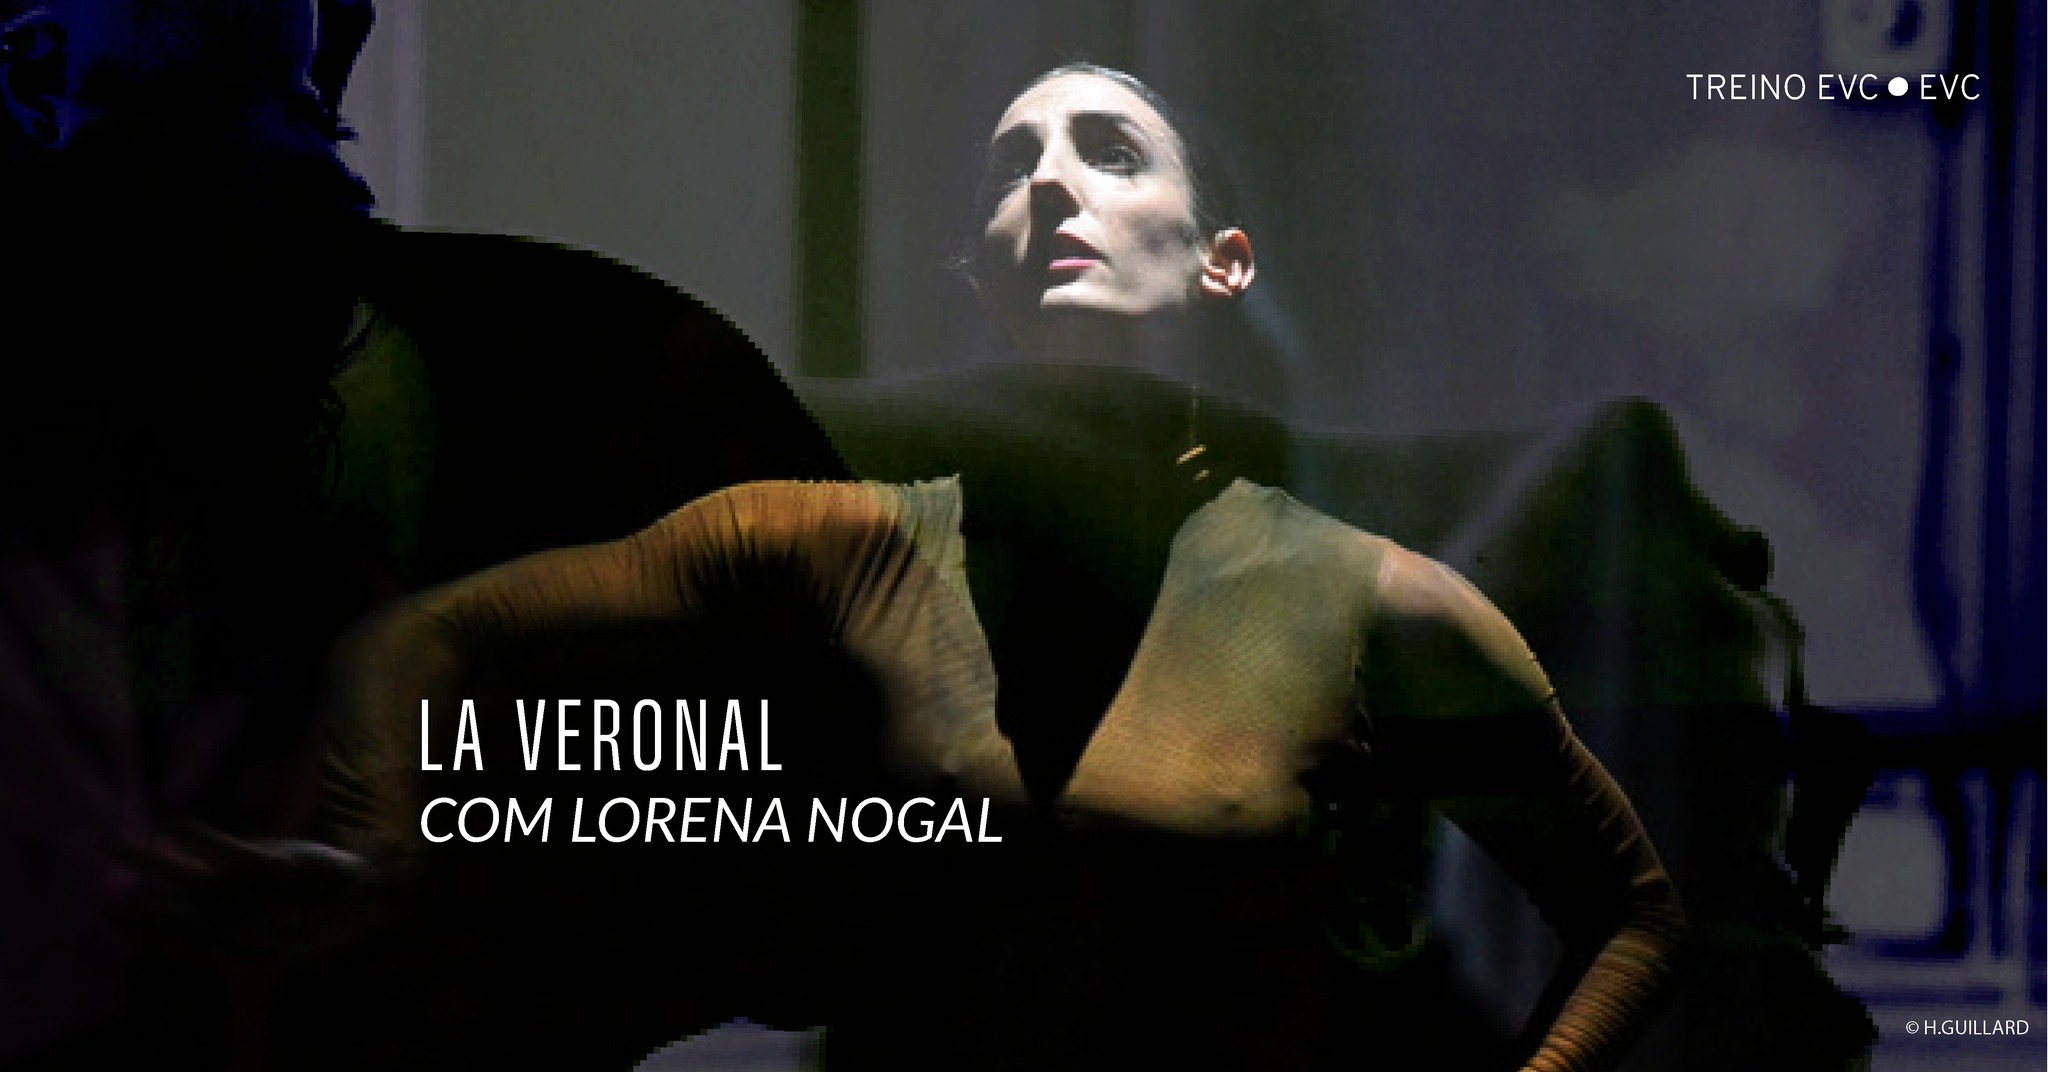 Treino EVC ⏤ La Veronal com Lorena Nogal